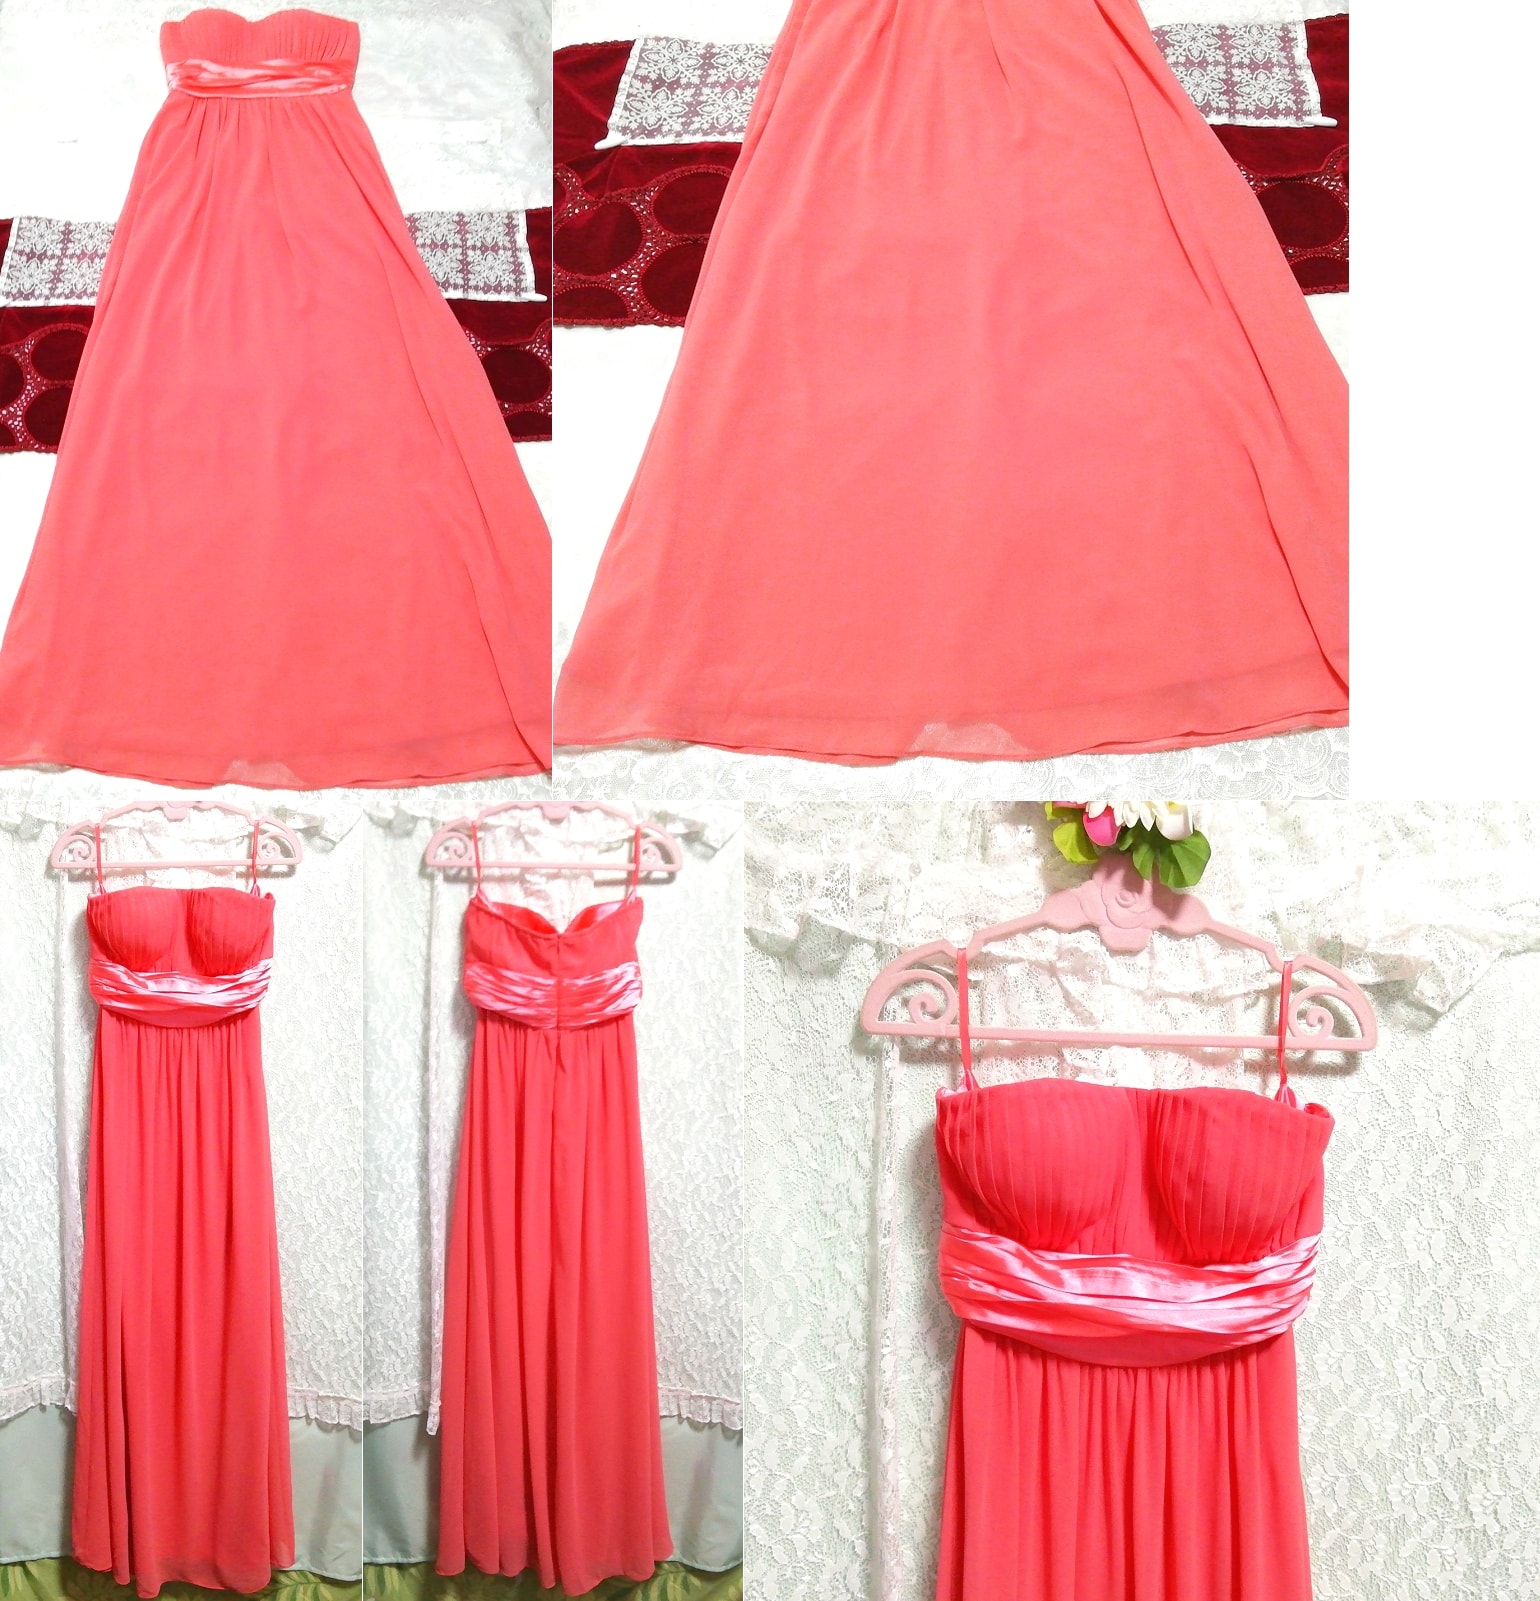 Salmon pink chiffon negligee nightgown maxi dress, fashion, ladies' fashion, nightwear, pajamas